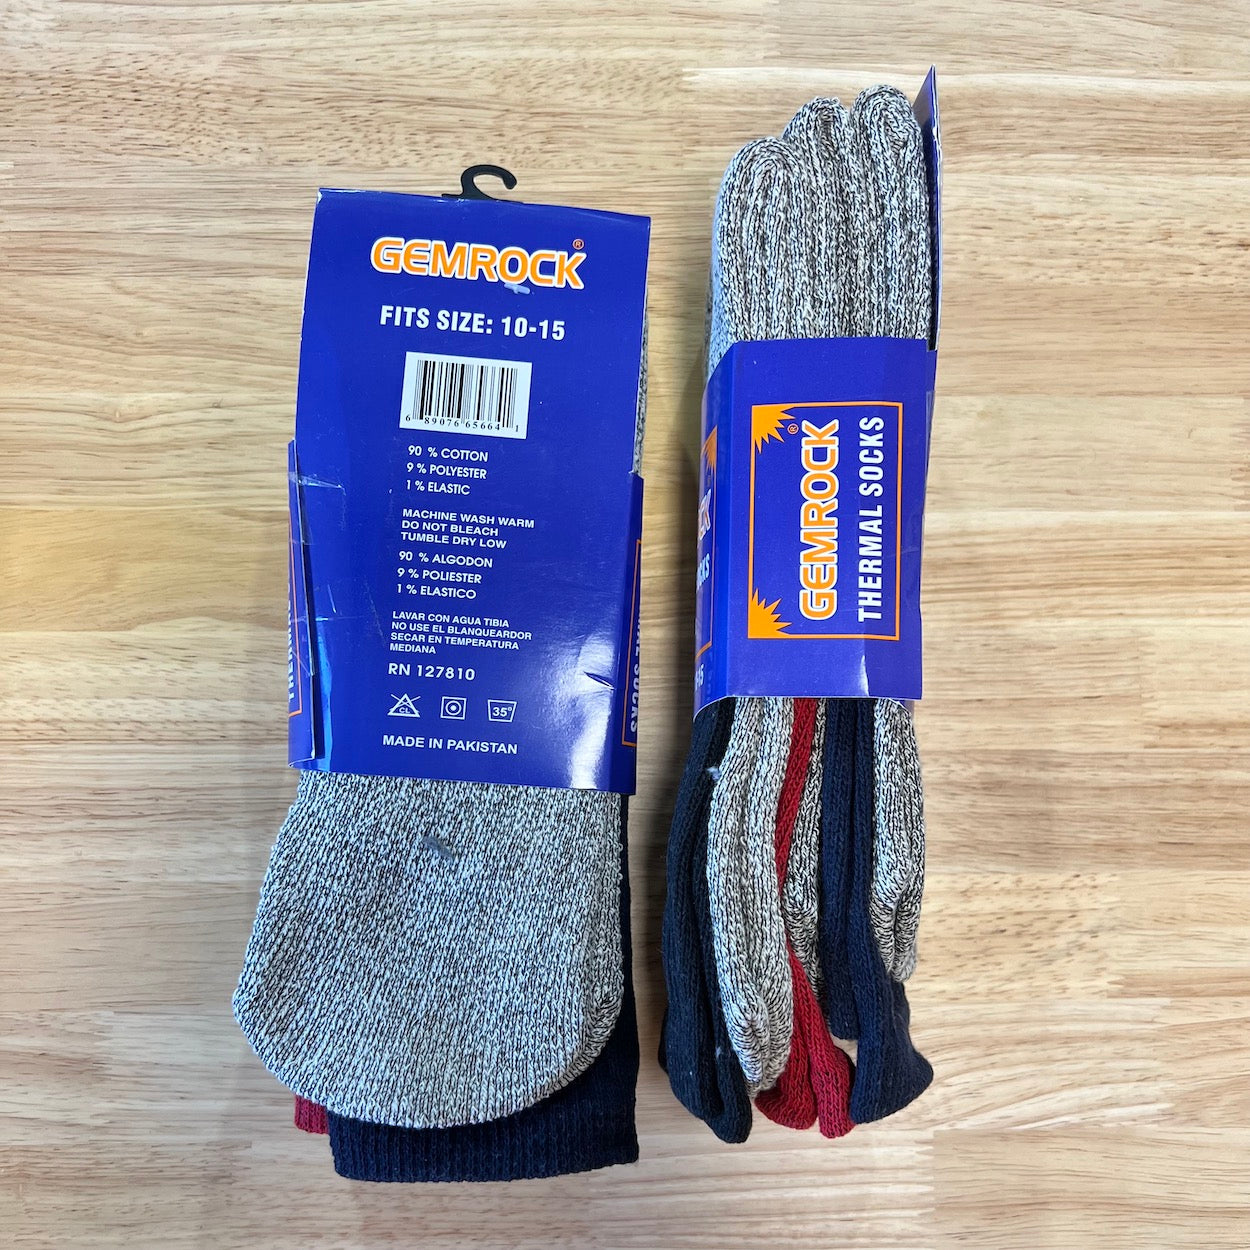 Thermal Socks 6 pack